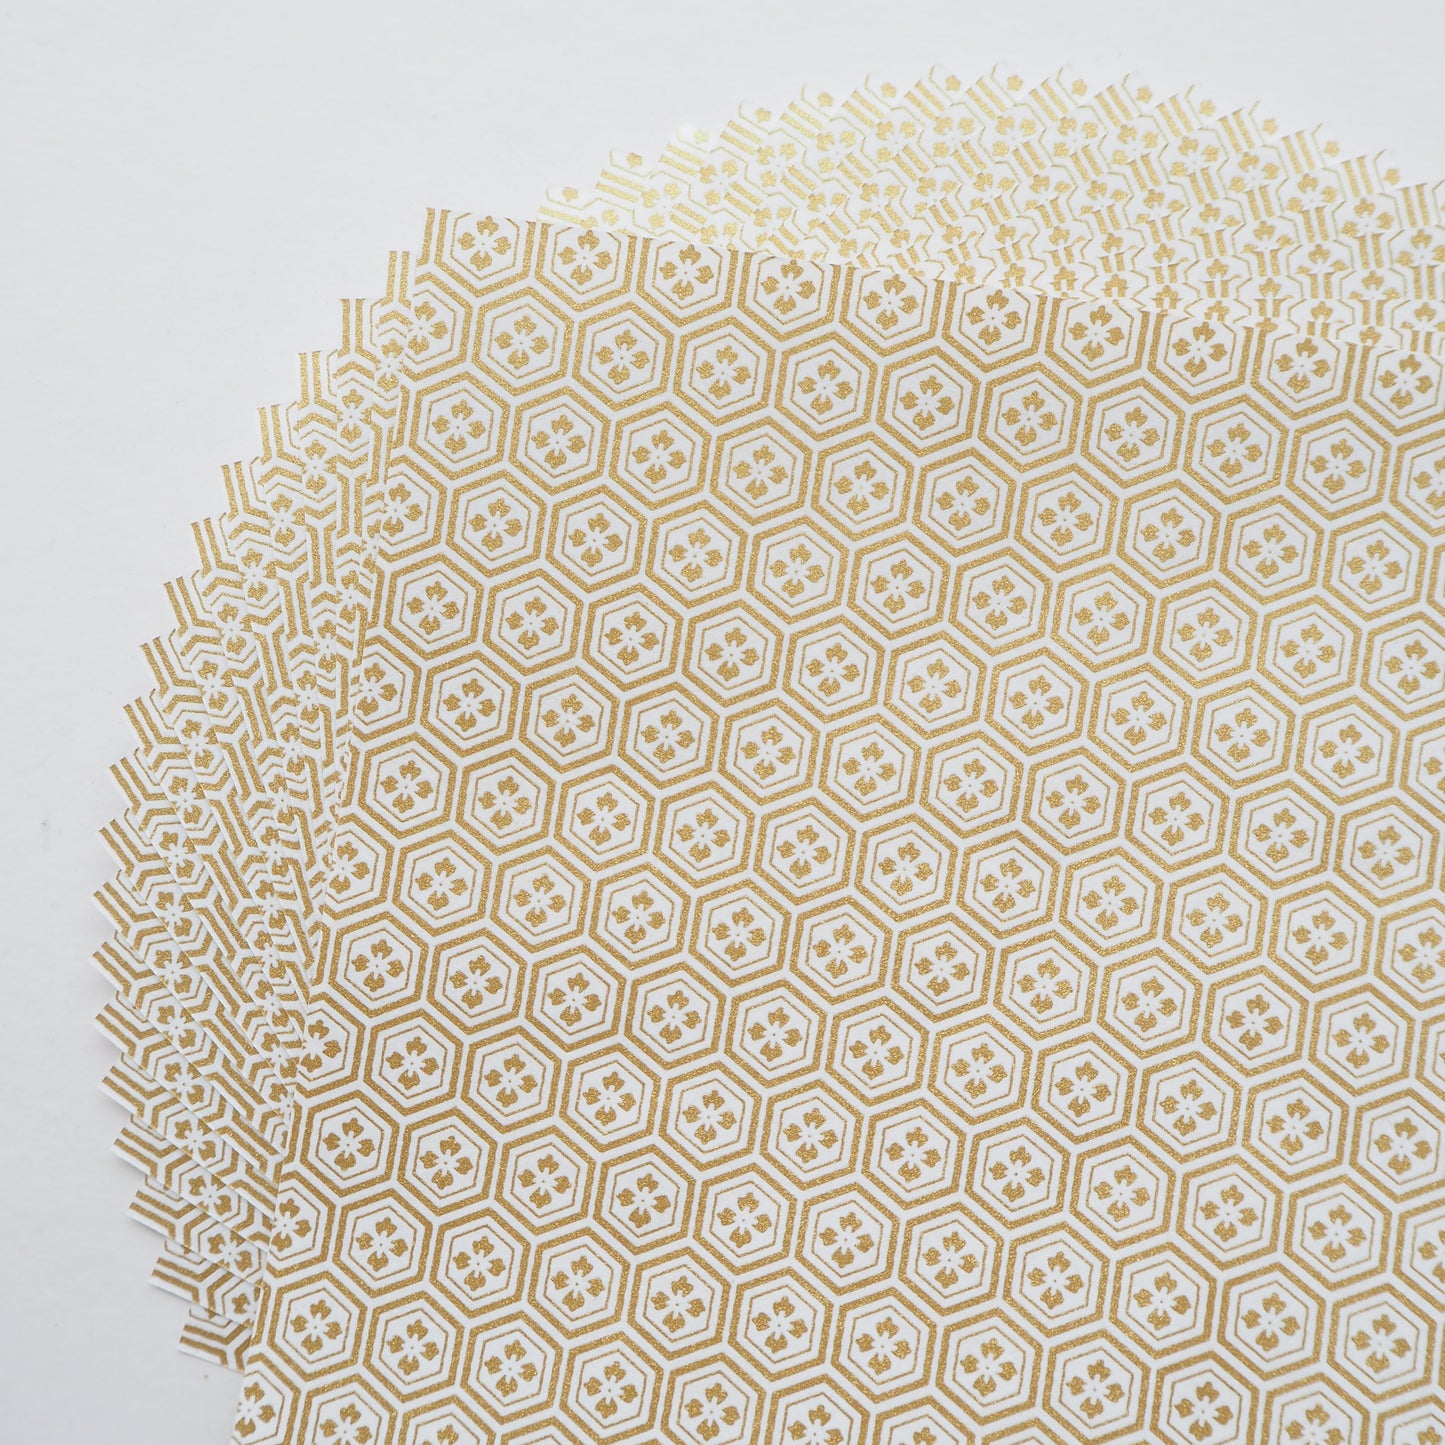 Pack of 20 Sheets 14x14cm Yuzen Washi Origami Paper HZ-375 - White Gold Tortoiseshell Diamond Flower